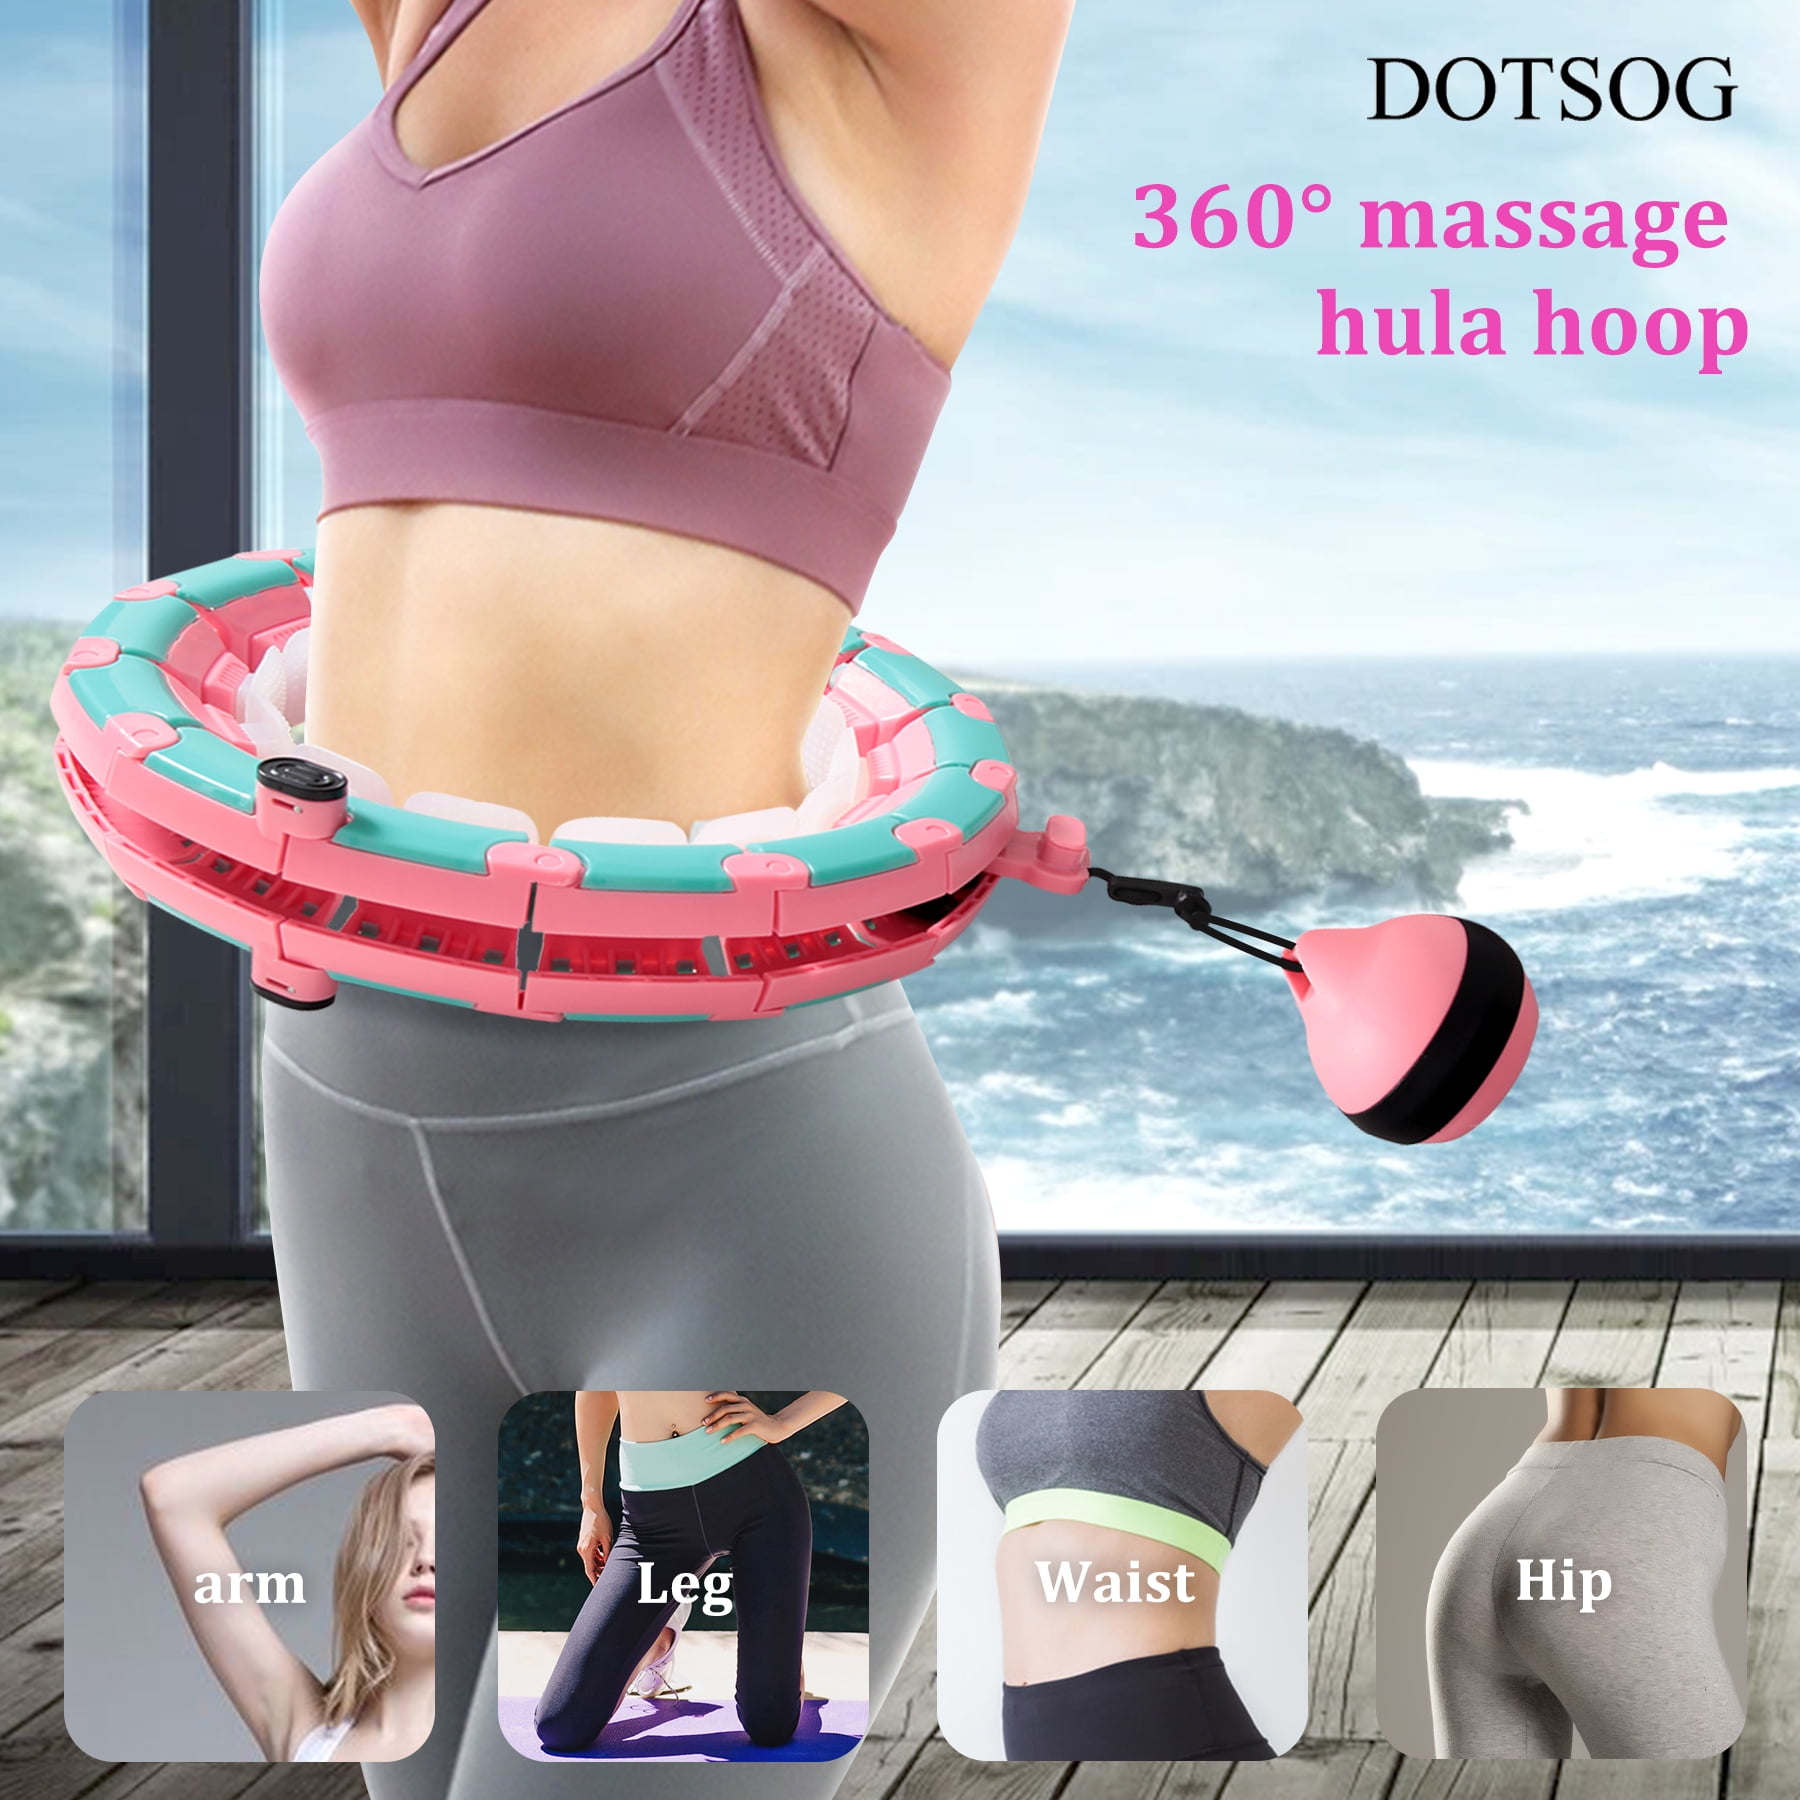 Hula Hoop Fitness Is Taking Over Tik Tok - 99.7 DJX